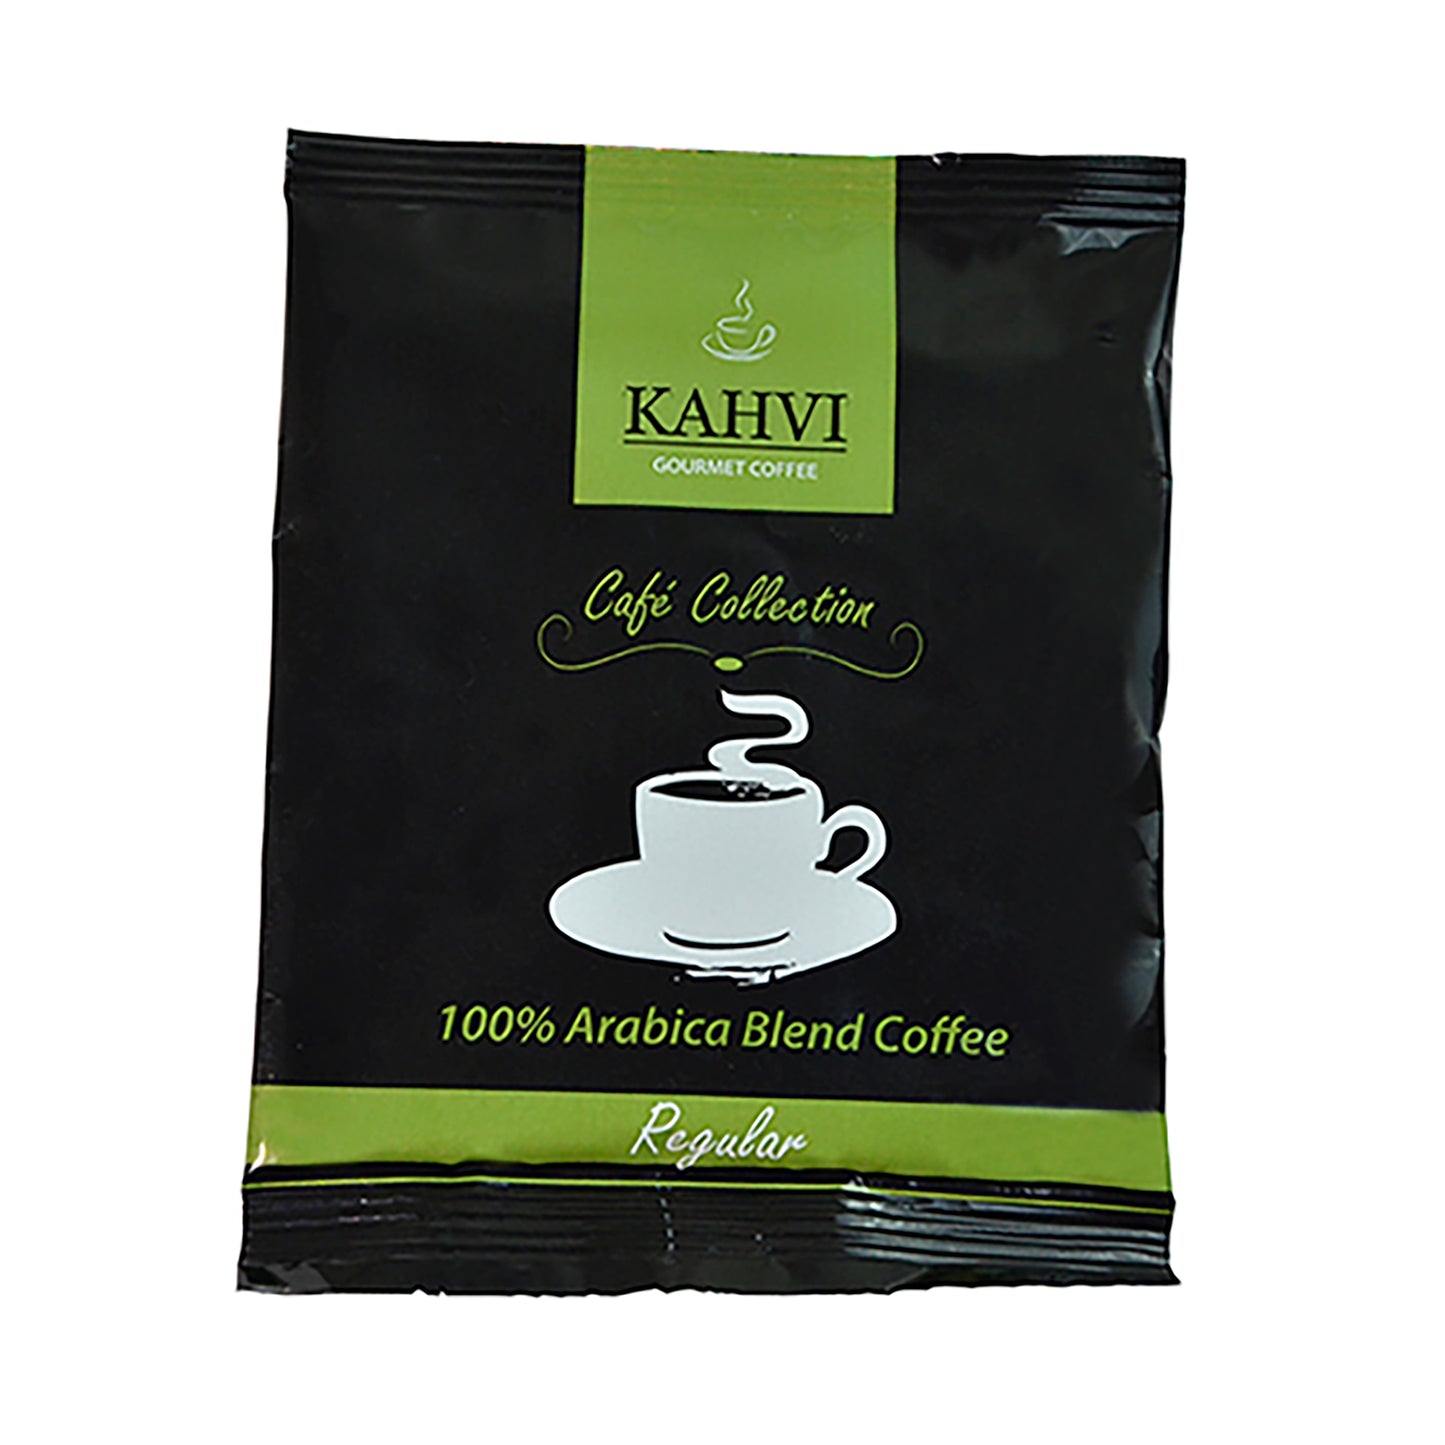 200PK KAHVI REGULAR COFFEE POUCH CASE